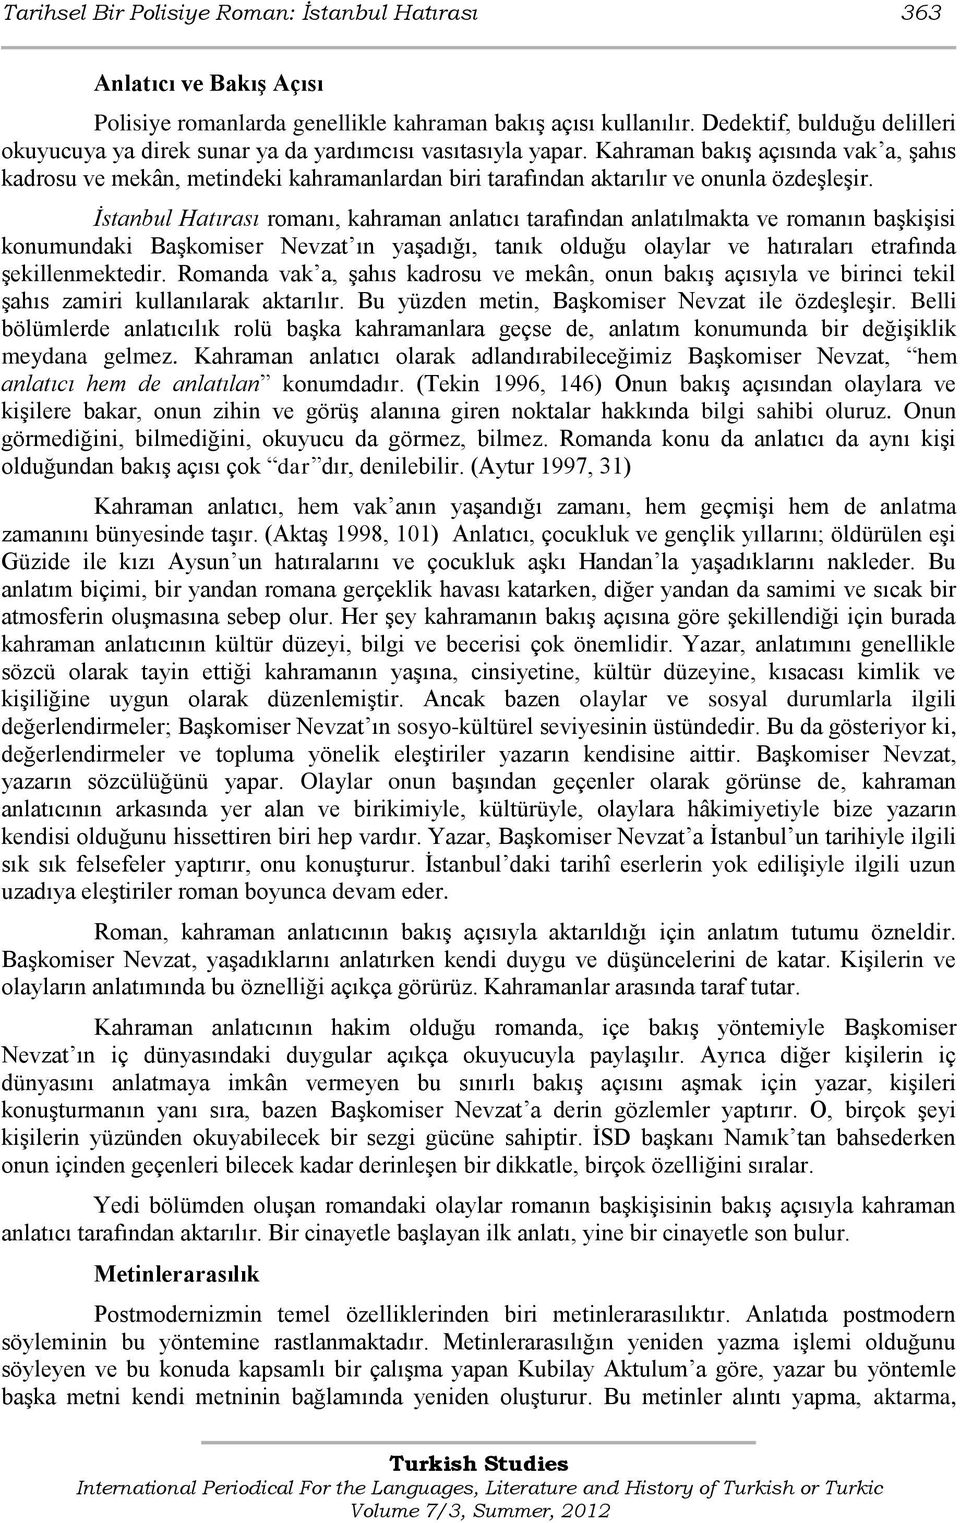 a historical detective novel istanbul hatirasi pdf free download